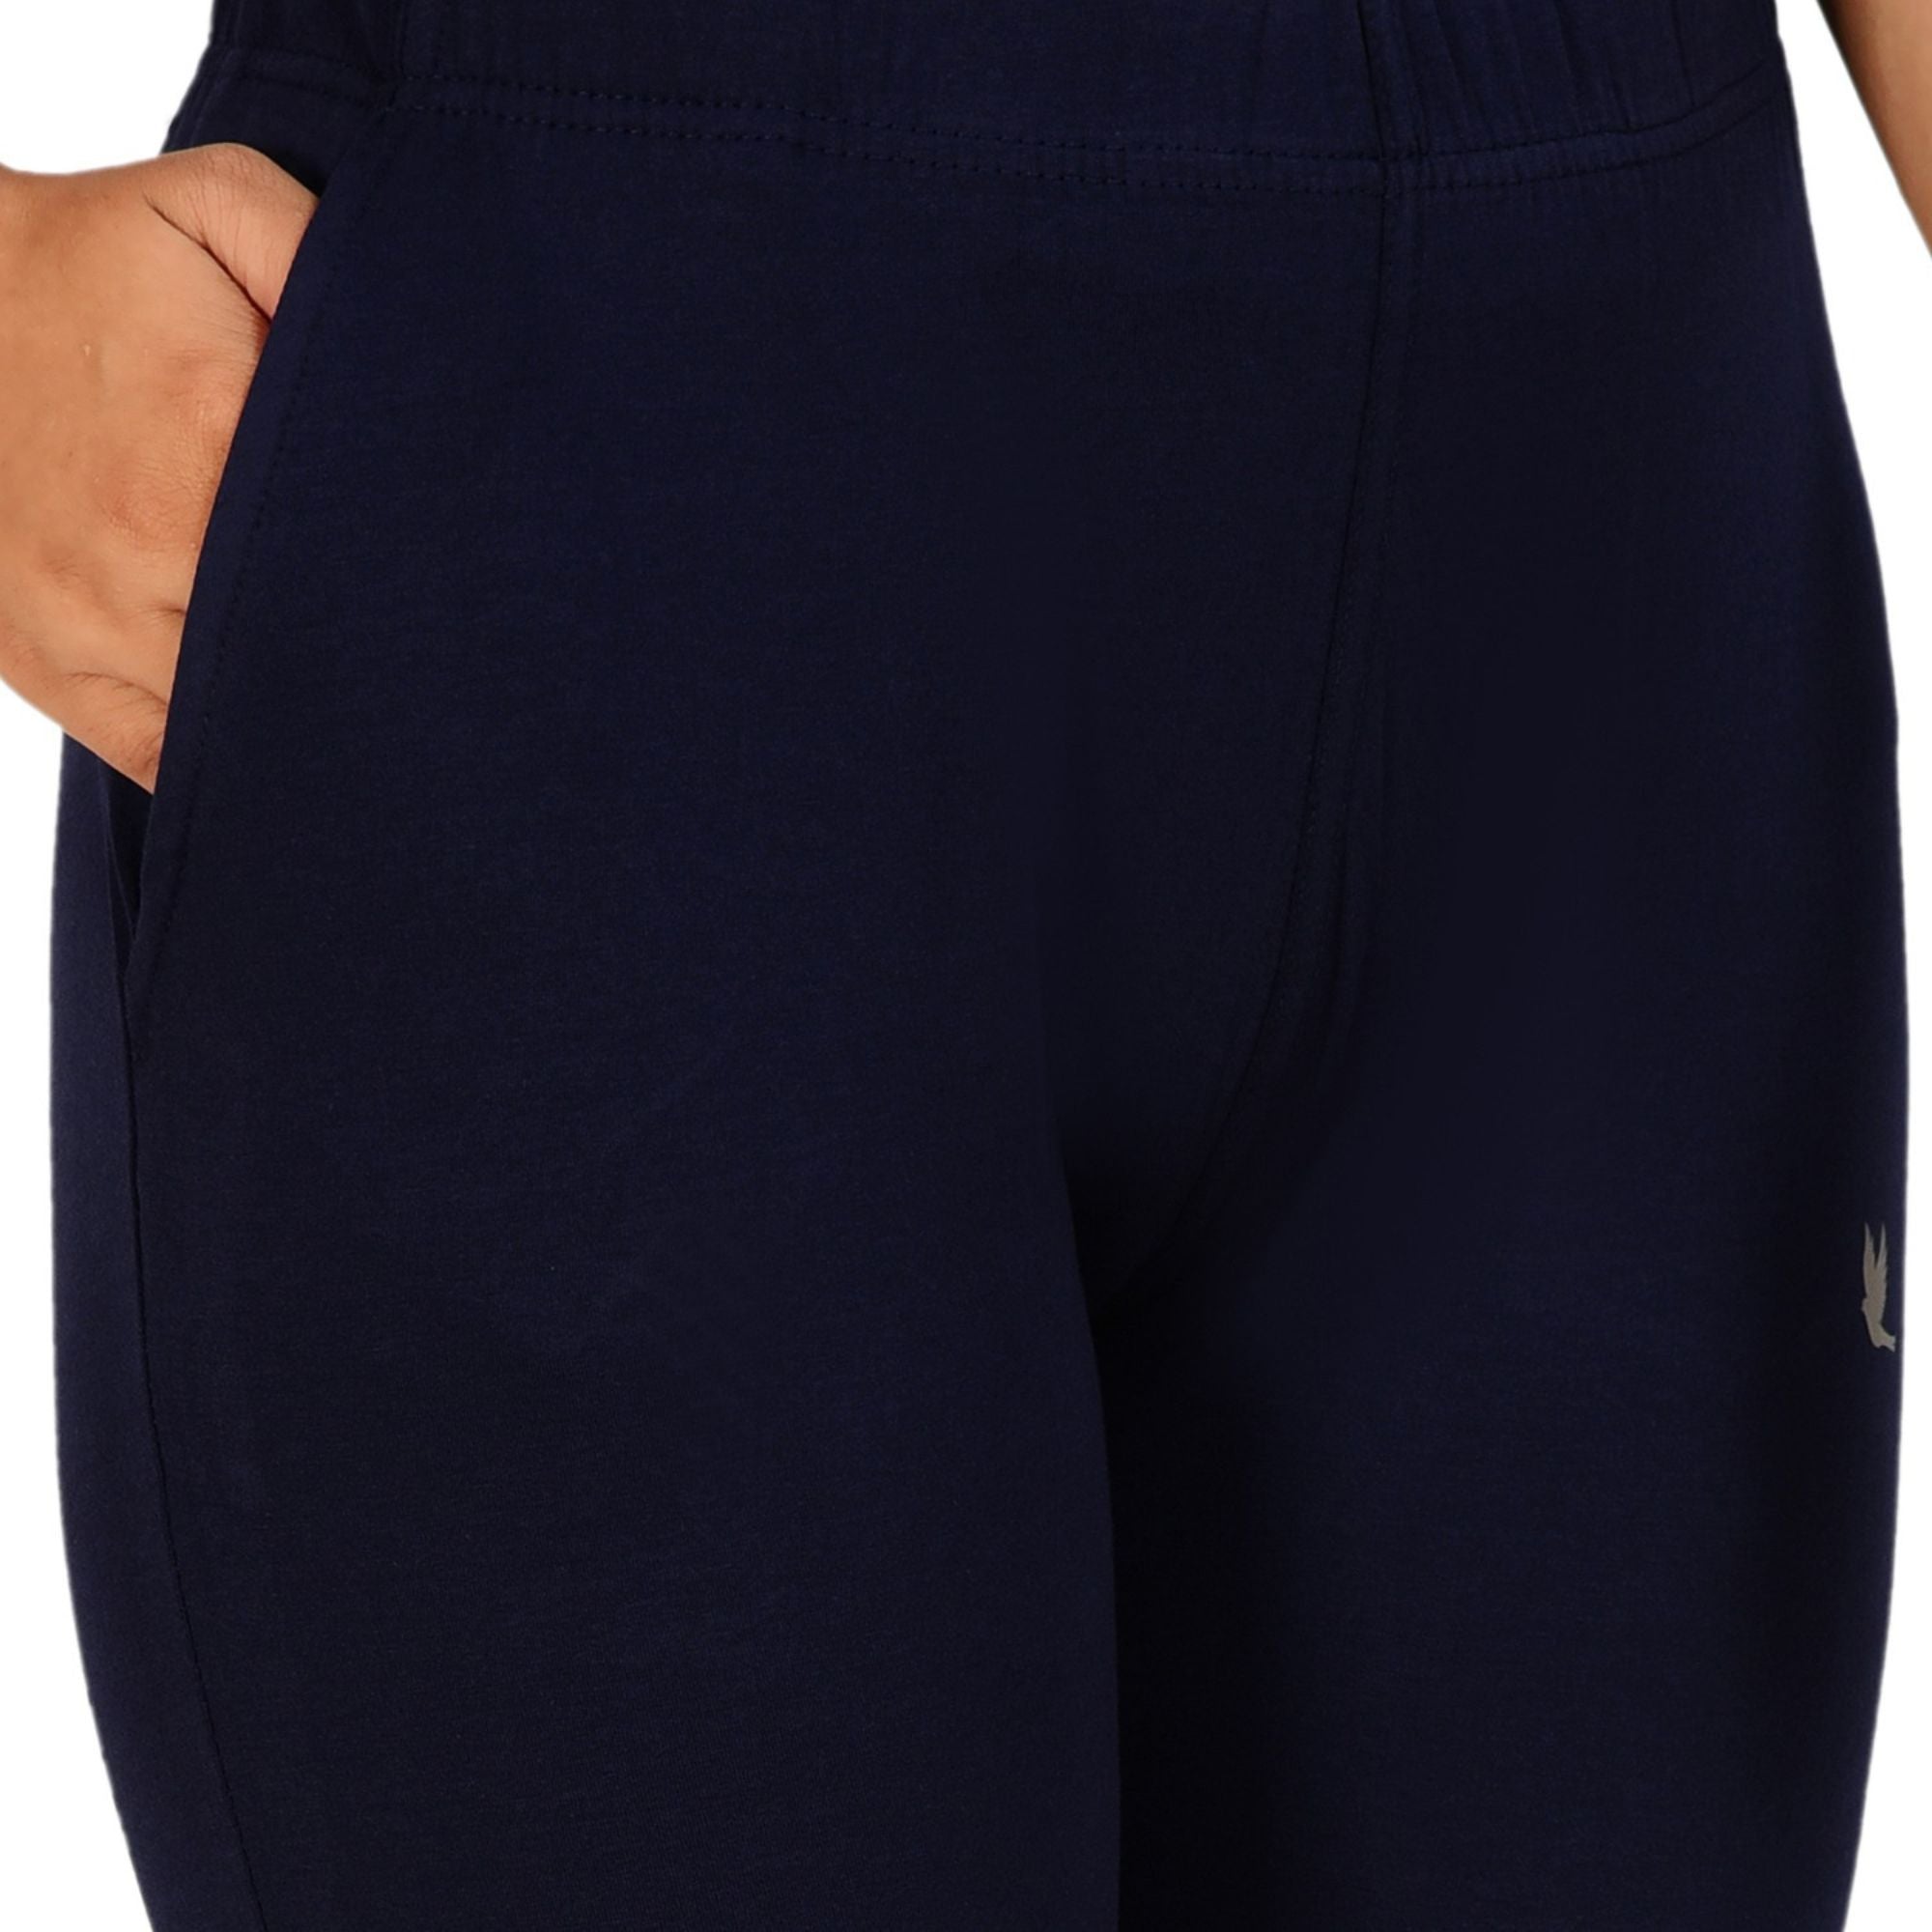 IUGA High Waisted Bootcut Yoga Pants With 4 Pockets